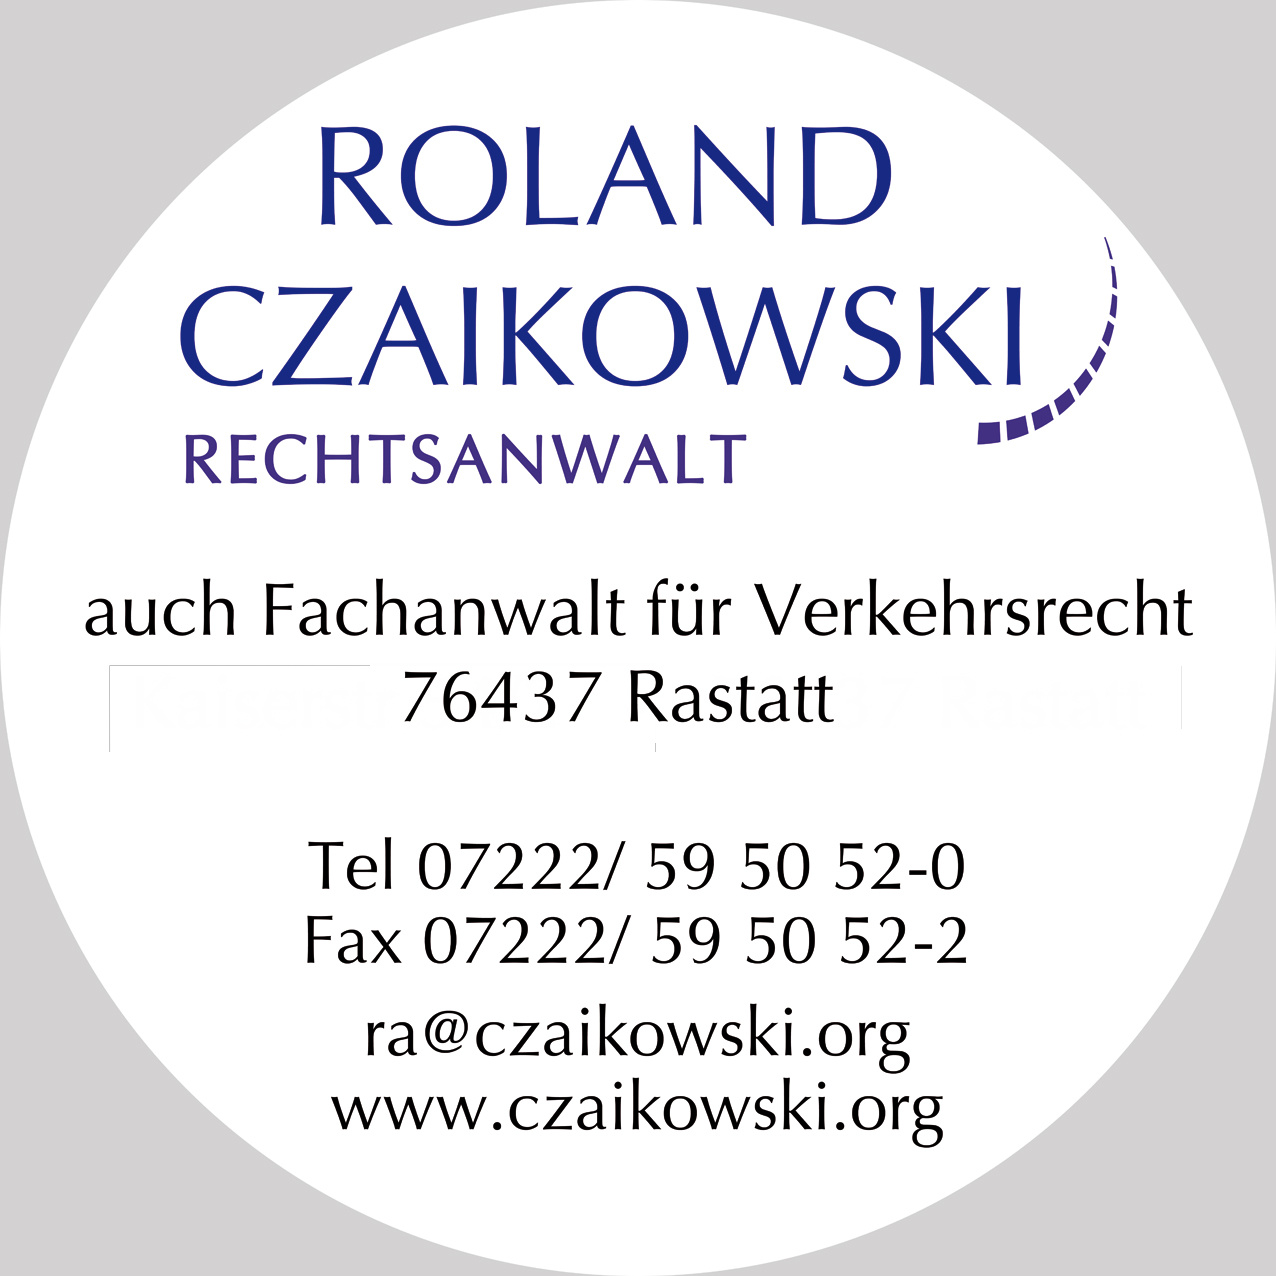 Fachanwalt Czaikowski Logo